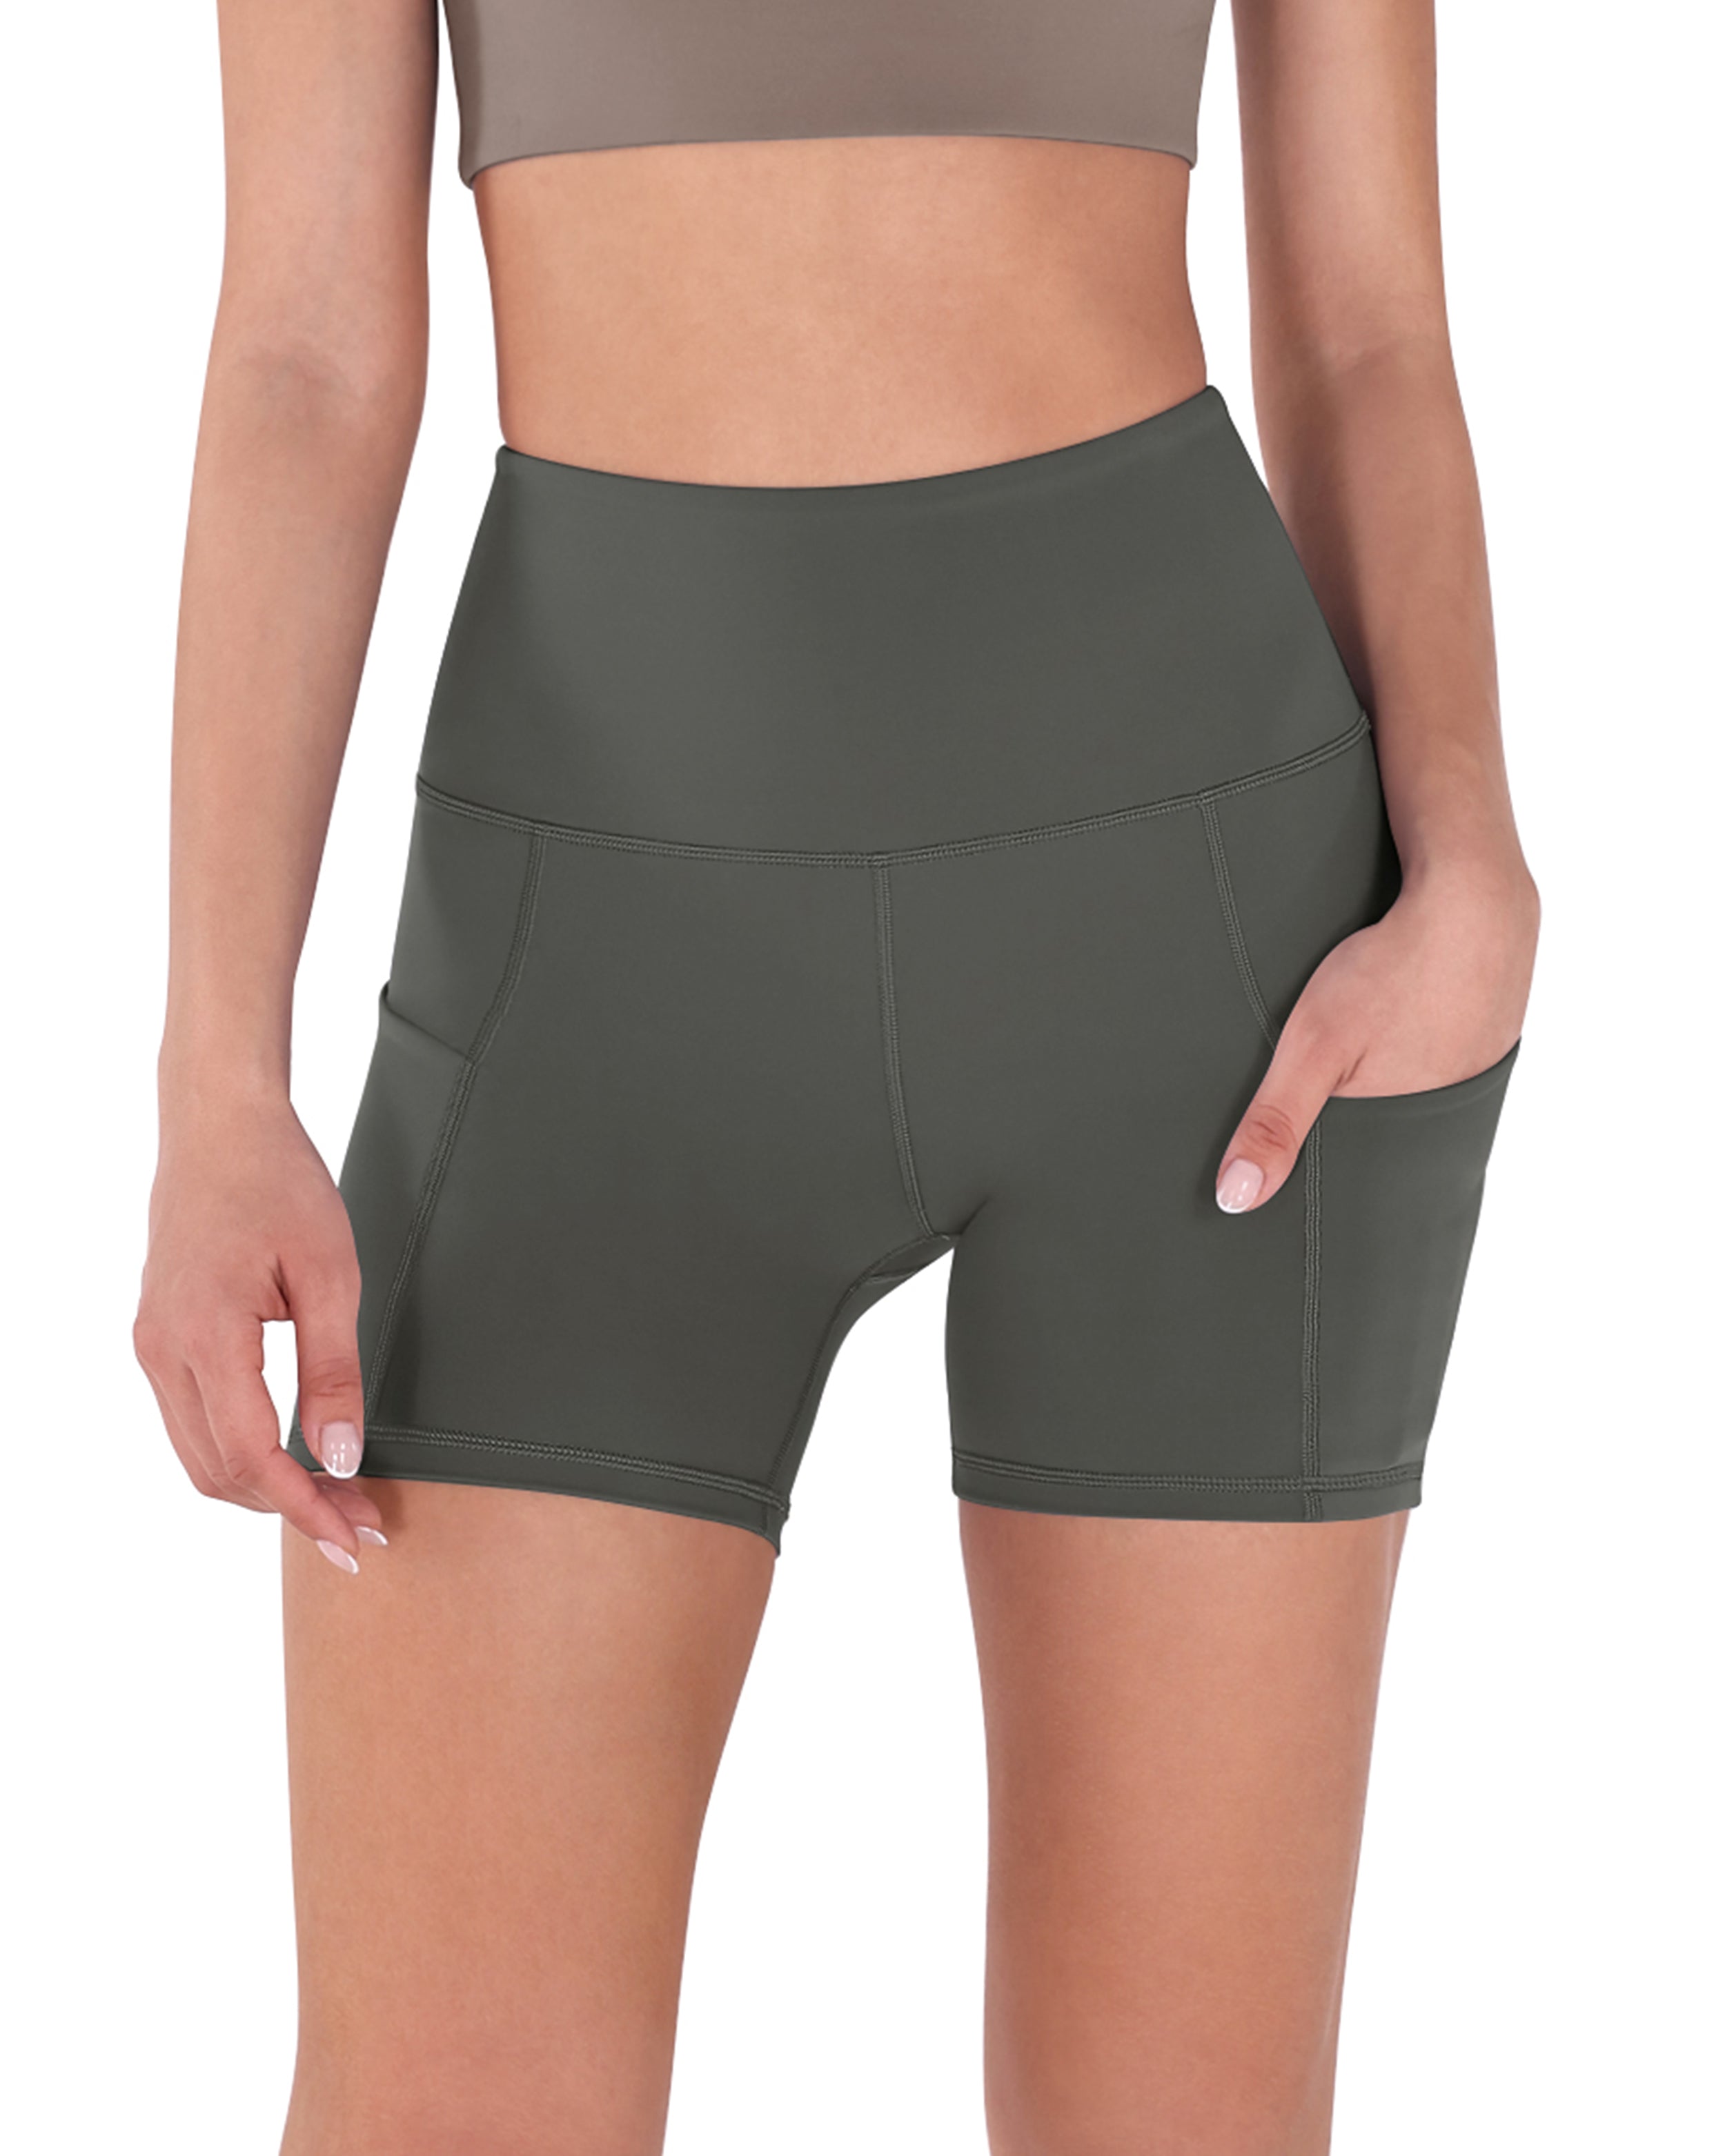 5" High Waist Tummy Control Shorts with Pockets - ododos